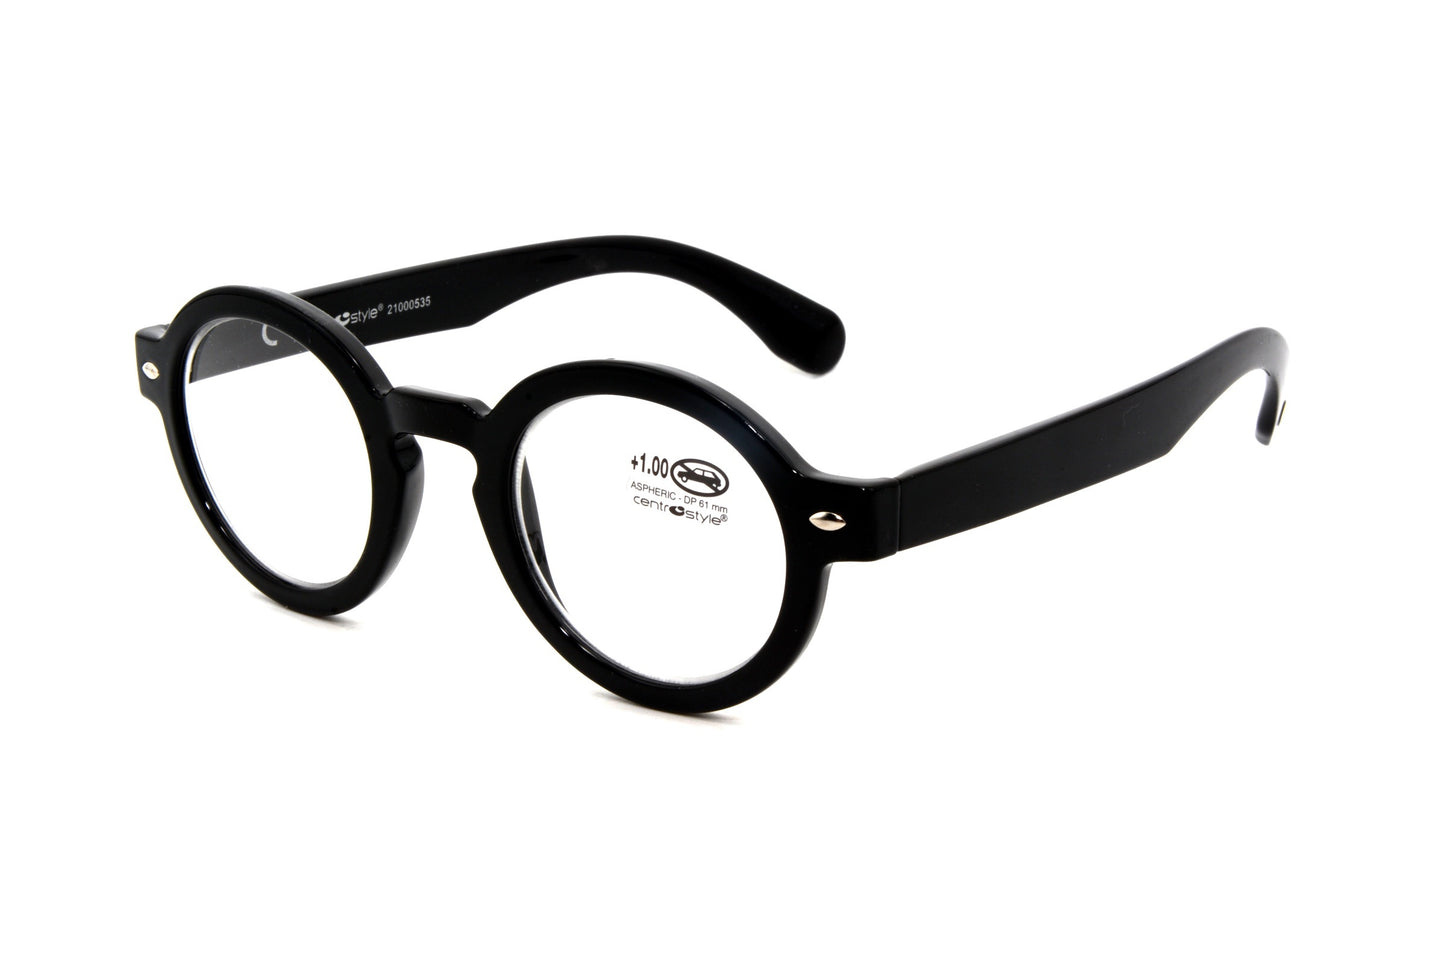 Centrostyle reading glasses R035945001100